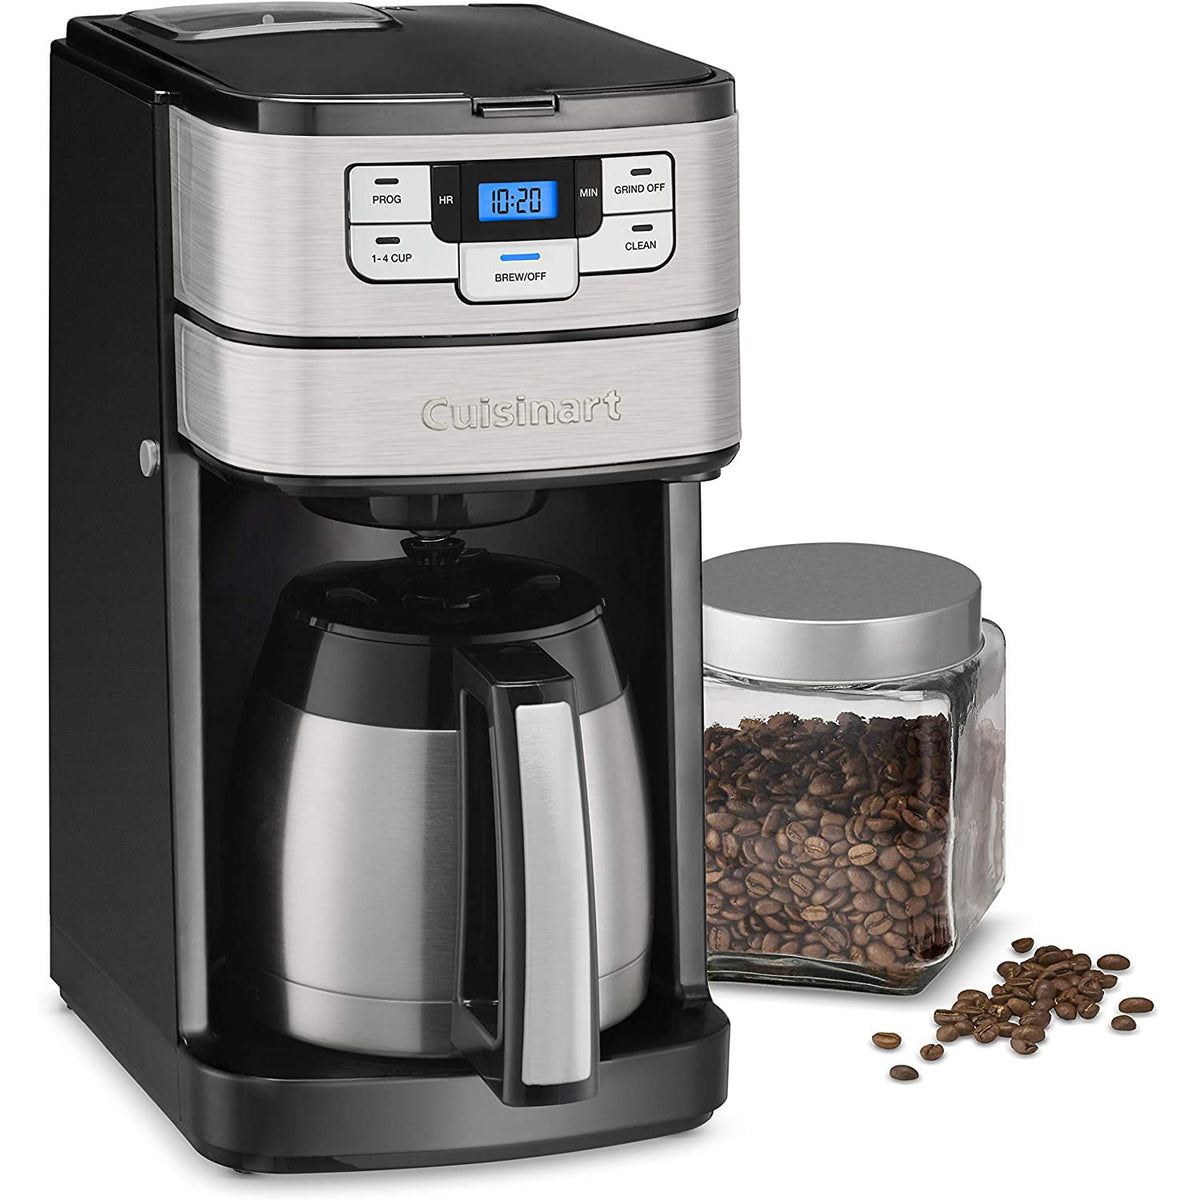 Cuisinart Grind & Brew Single Serve DGB-1 Coffee Maker Review